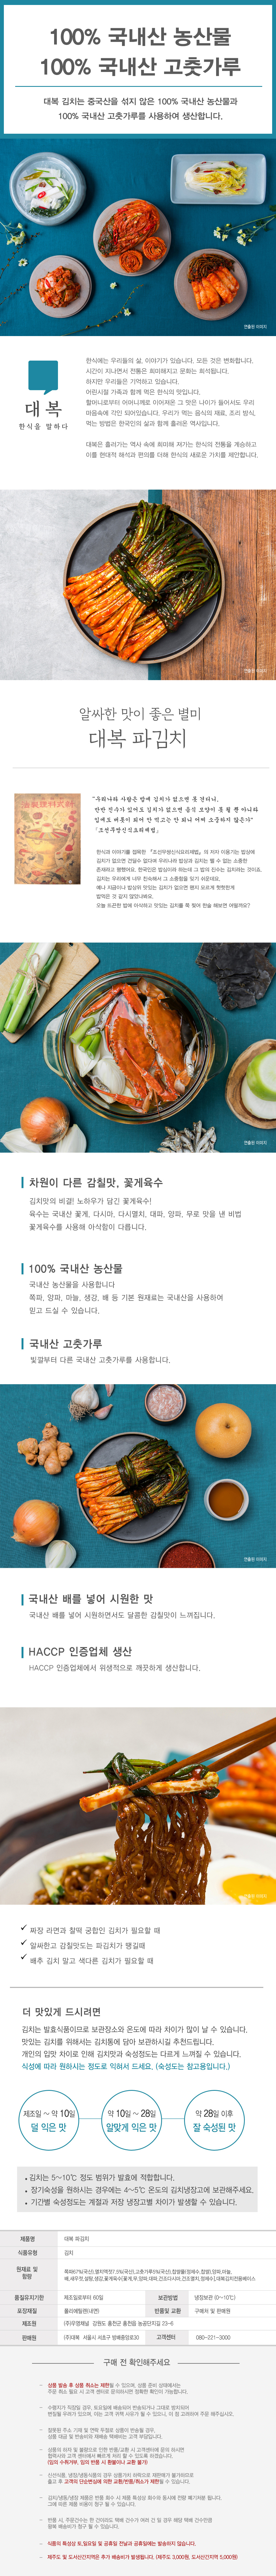 kimchi(pa)h.jpg